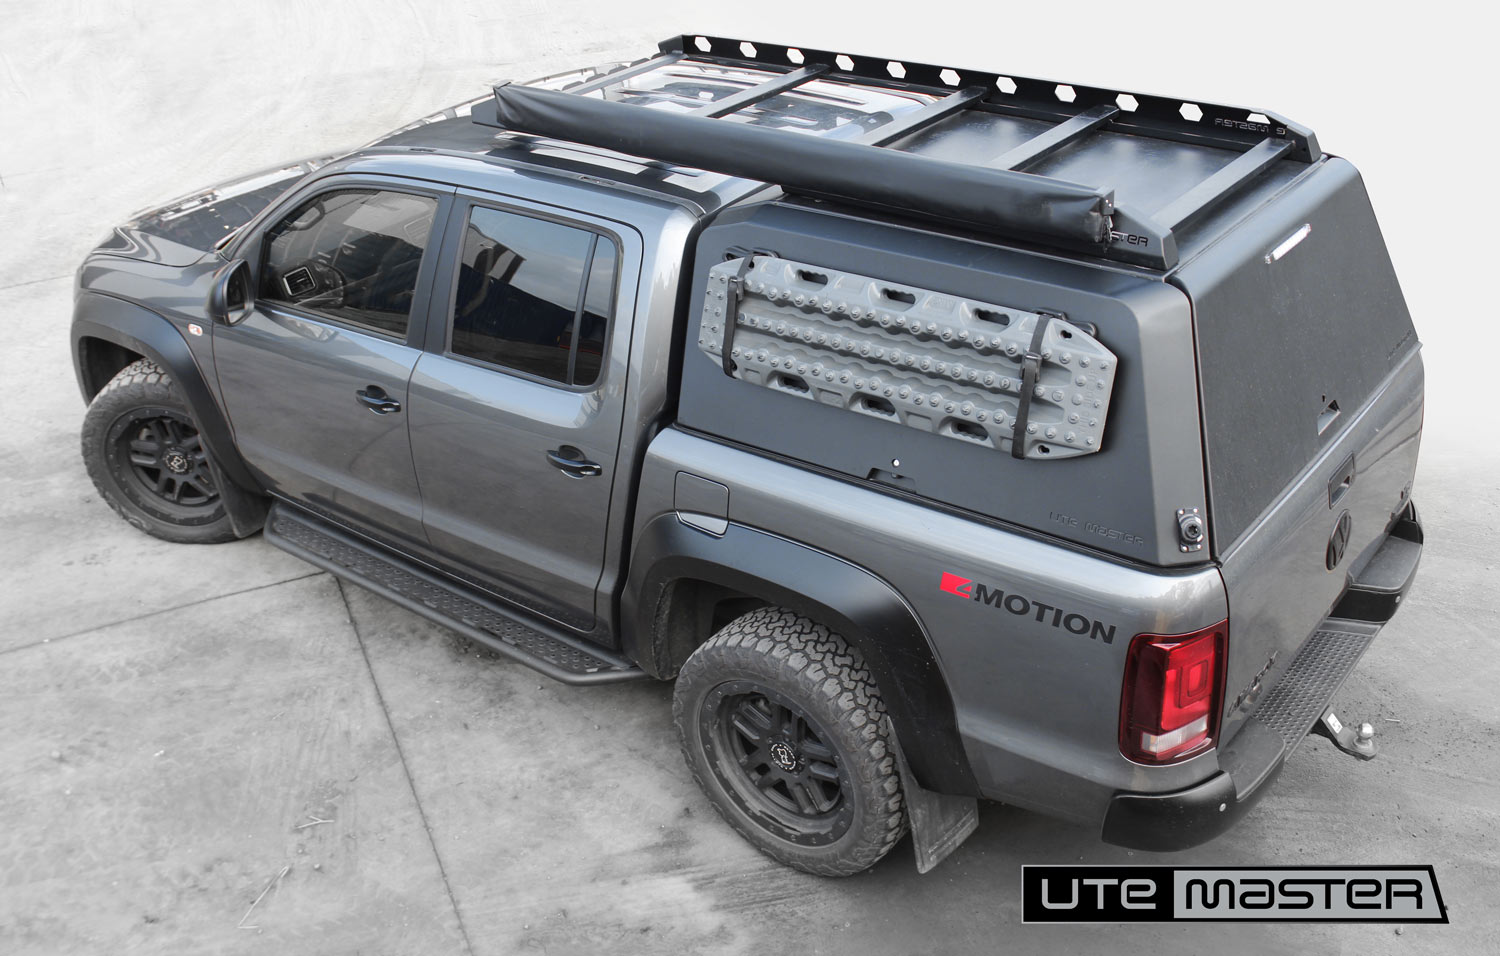 Ute Tub Canopy to suit Volkswagen Amarok VW Overlanding Setup 4x4 Awning Aluminium Tough Black Grey Rack